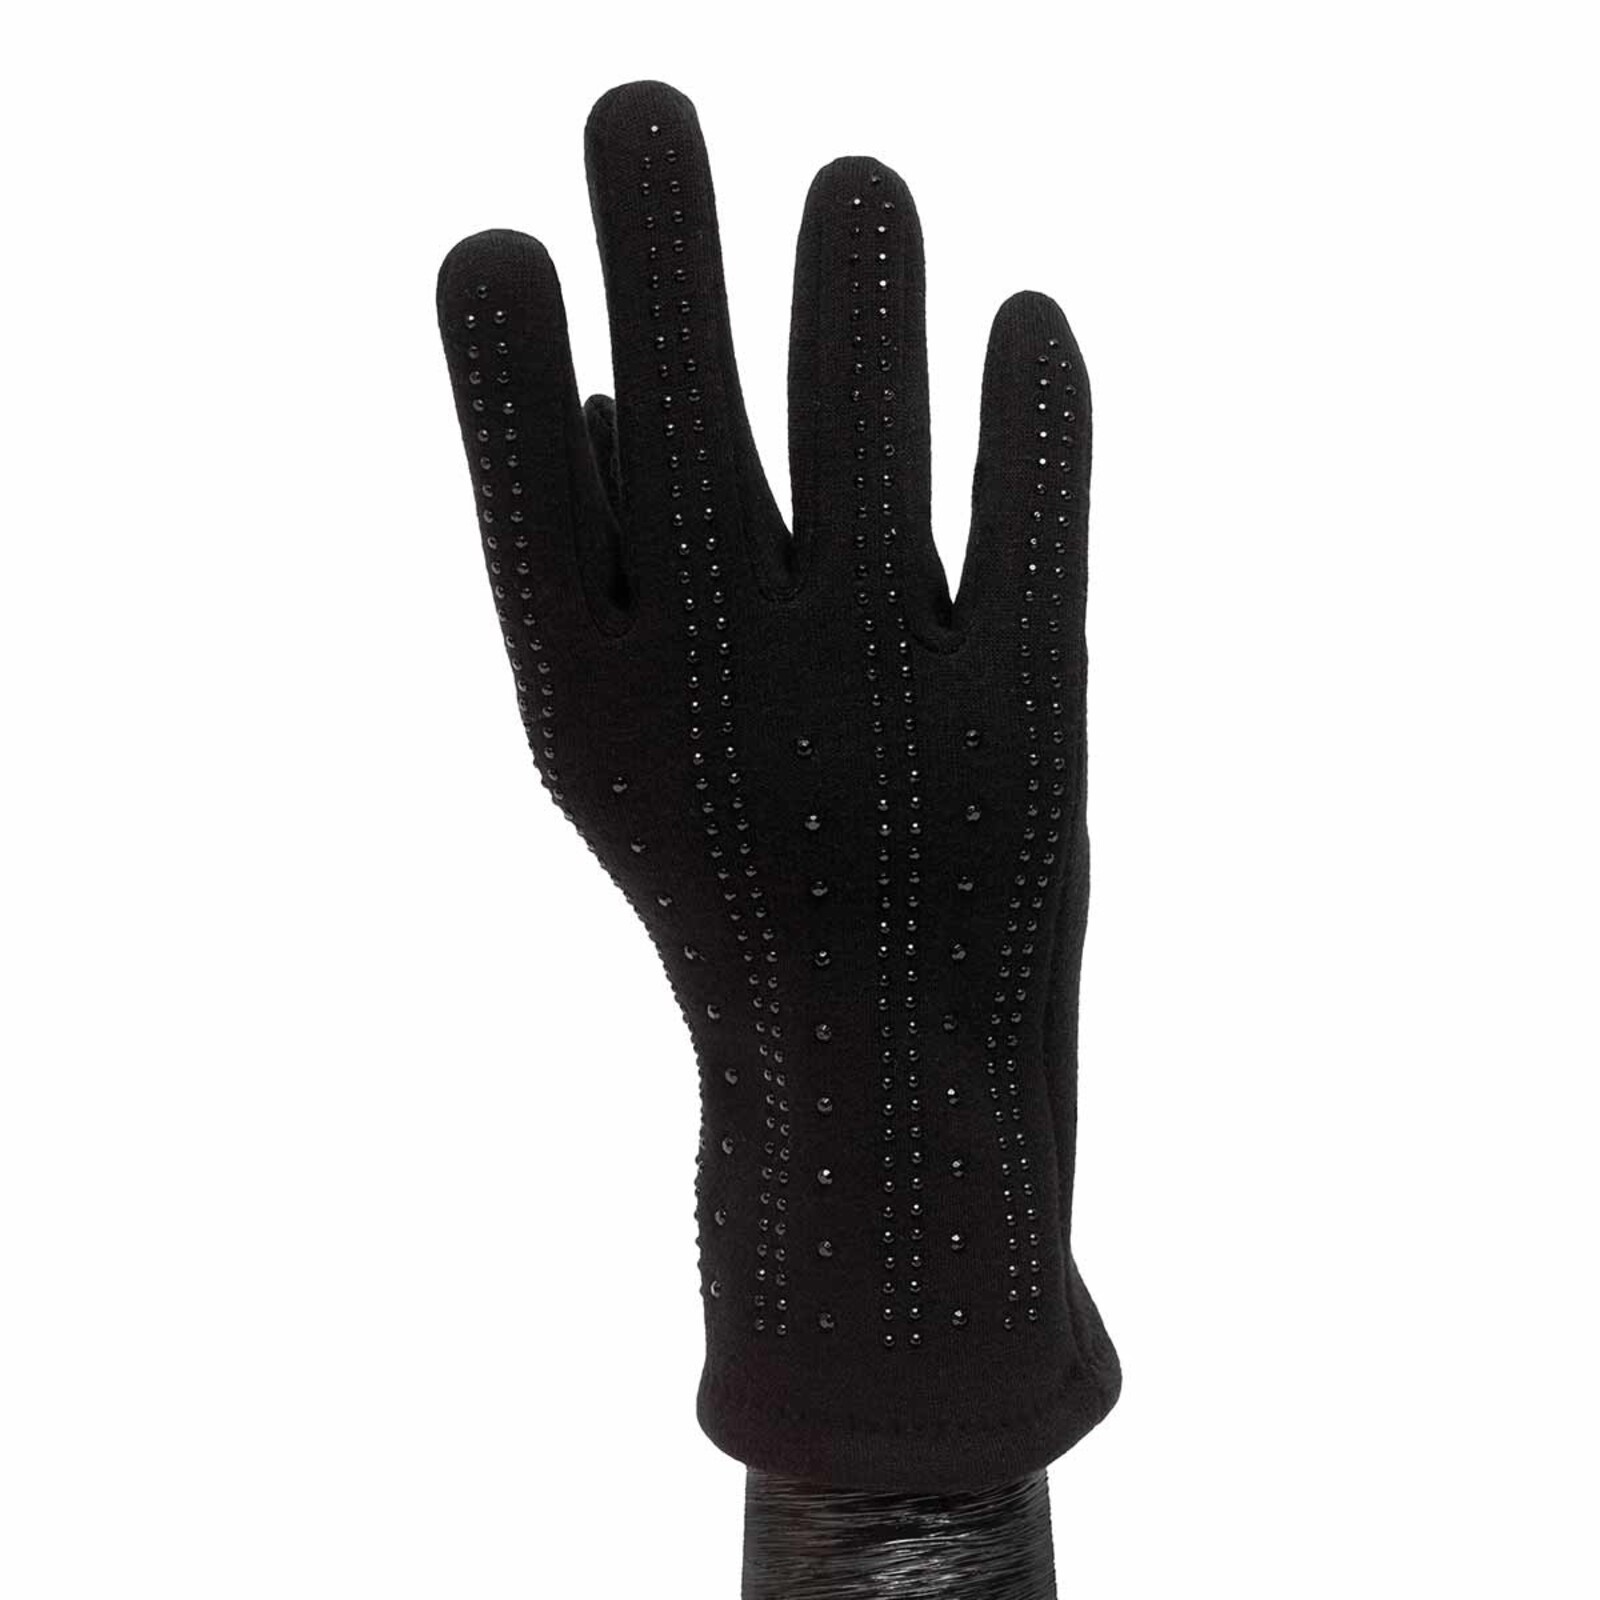 Meravic Black with Sparkles Gloves   X7986 loading=